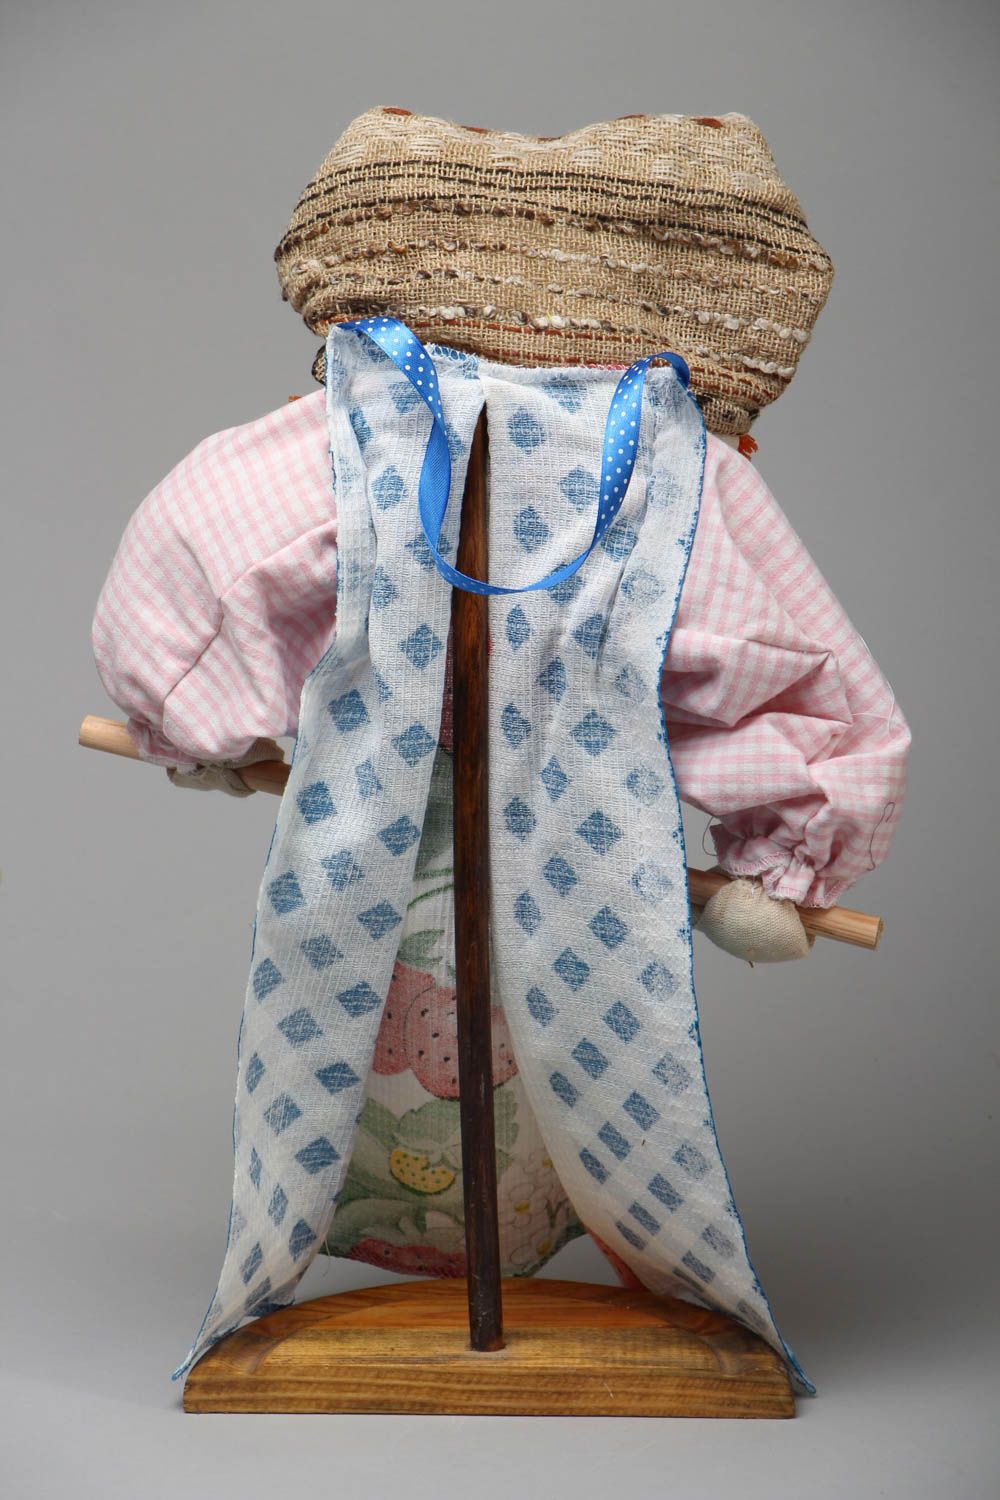 Muñeca artesanal, sotenedor de las toallas foto 3